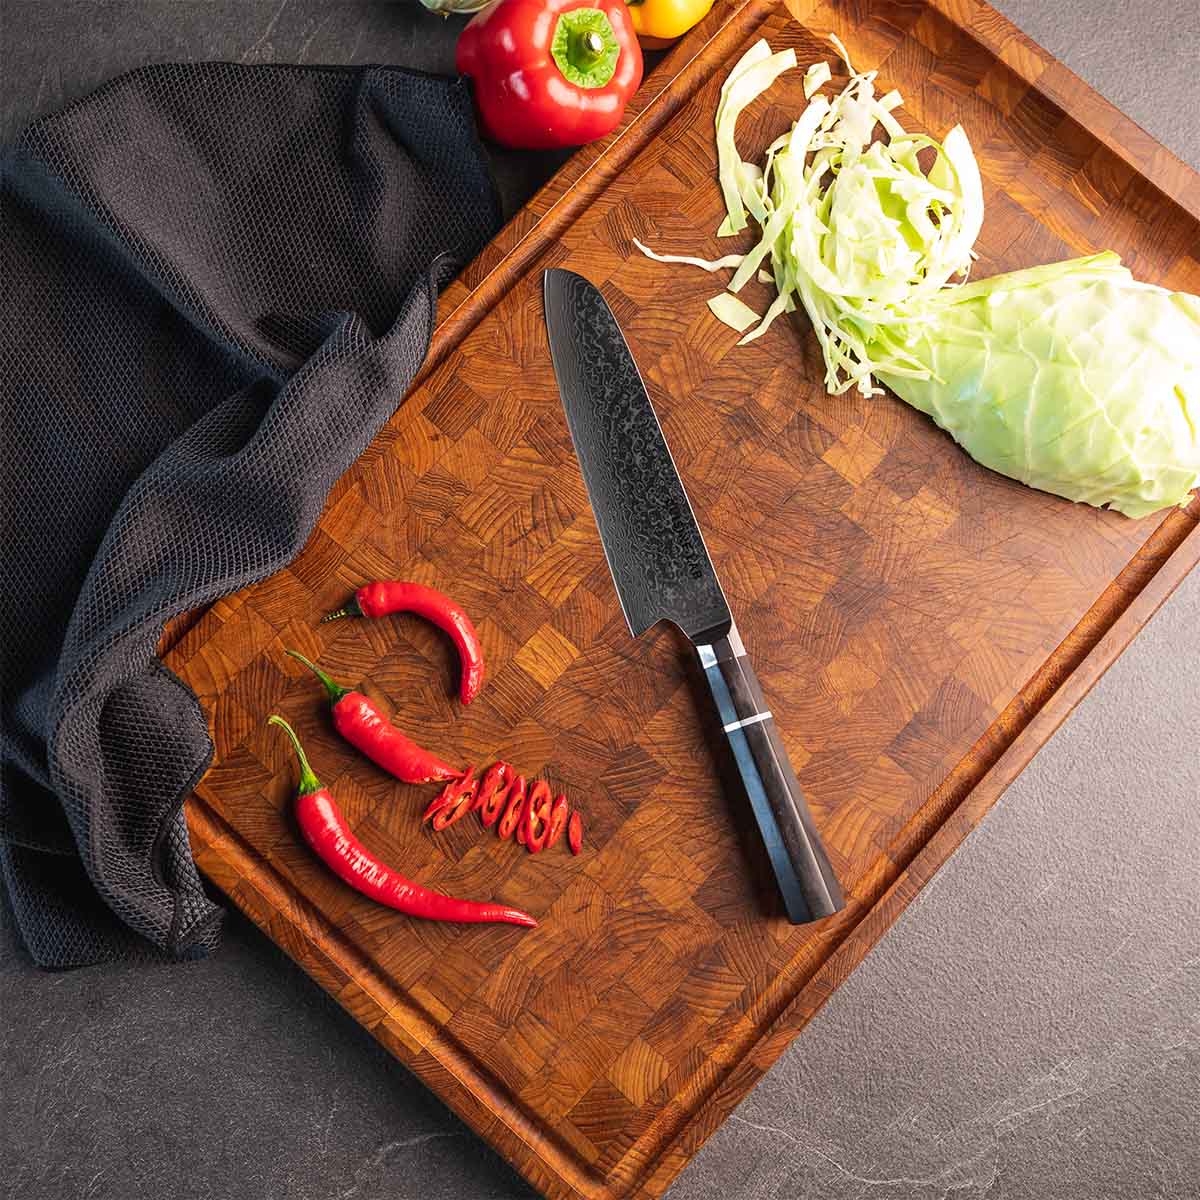 Cuisine Lab Legacy Collection Santoku kokkekniv. Den japanske kokkekniv